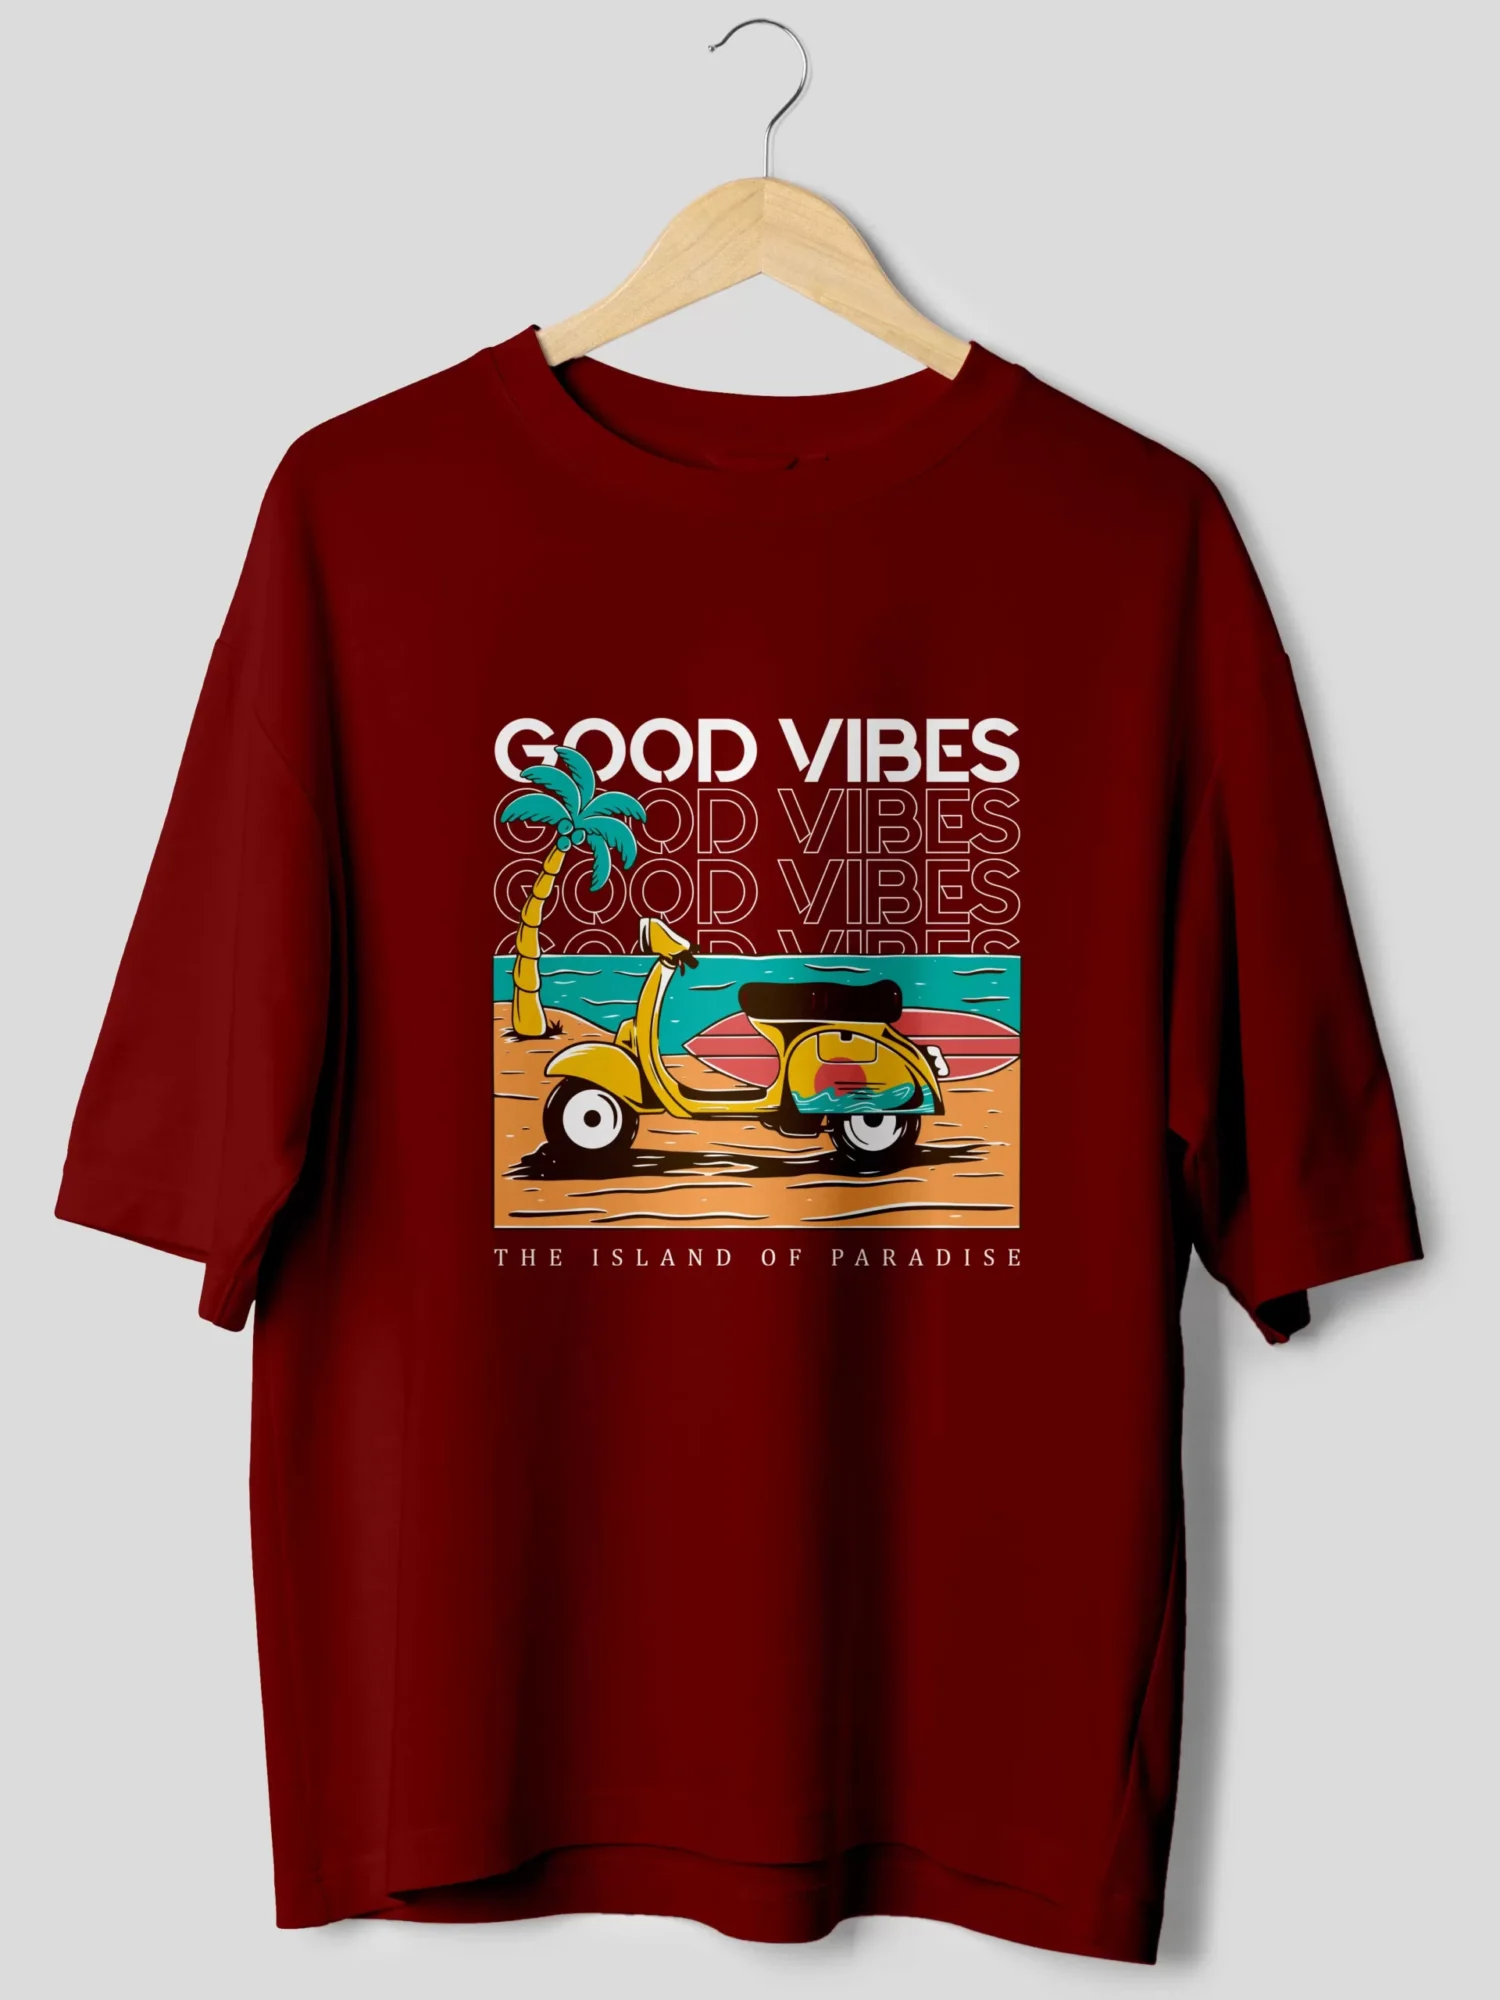 Good Vibes Retro Oversized T-Shirt